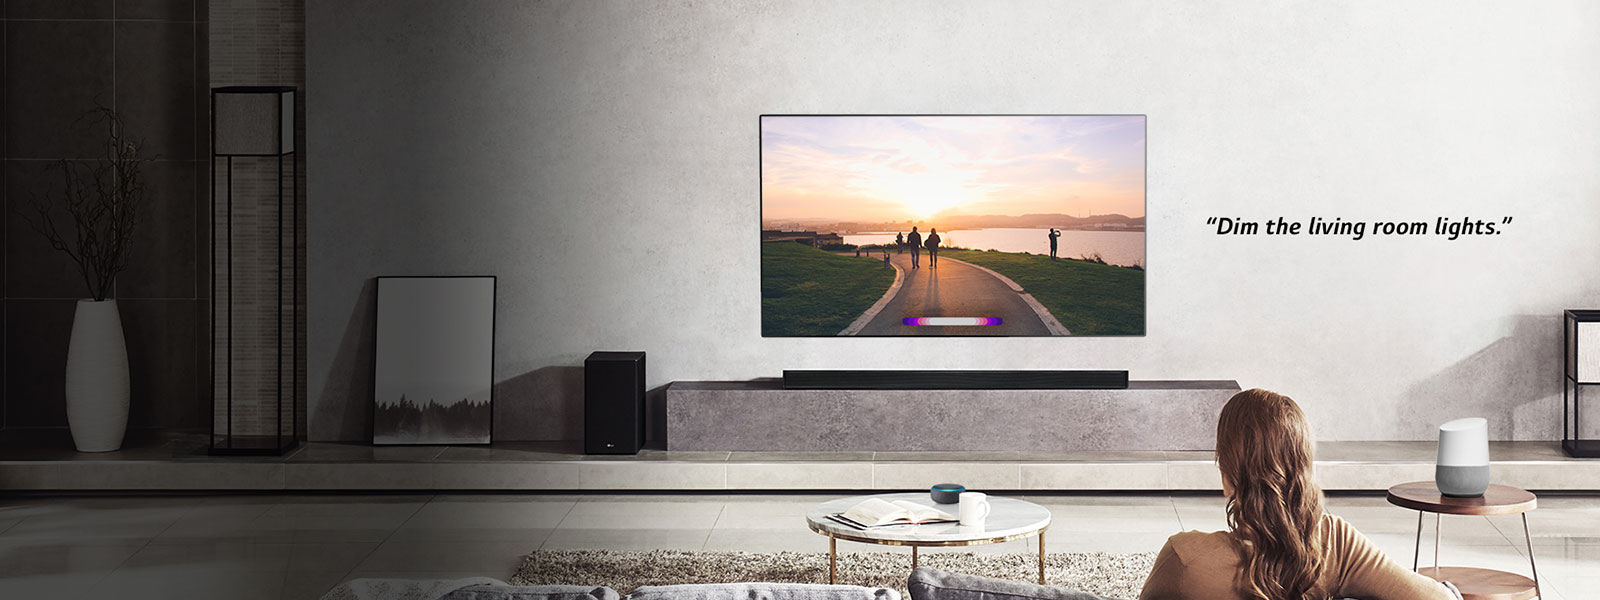 Dim The Living Room Lights - Smart Tv In A Room - HD Wallpaper 